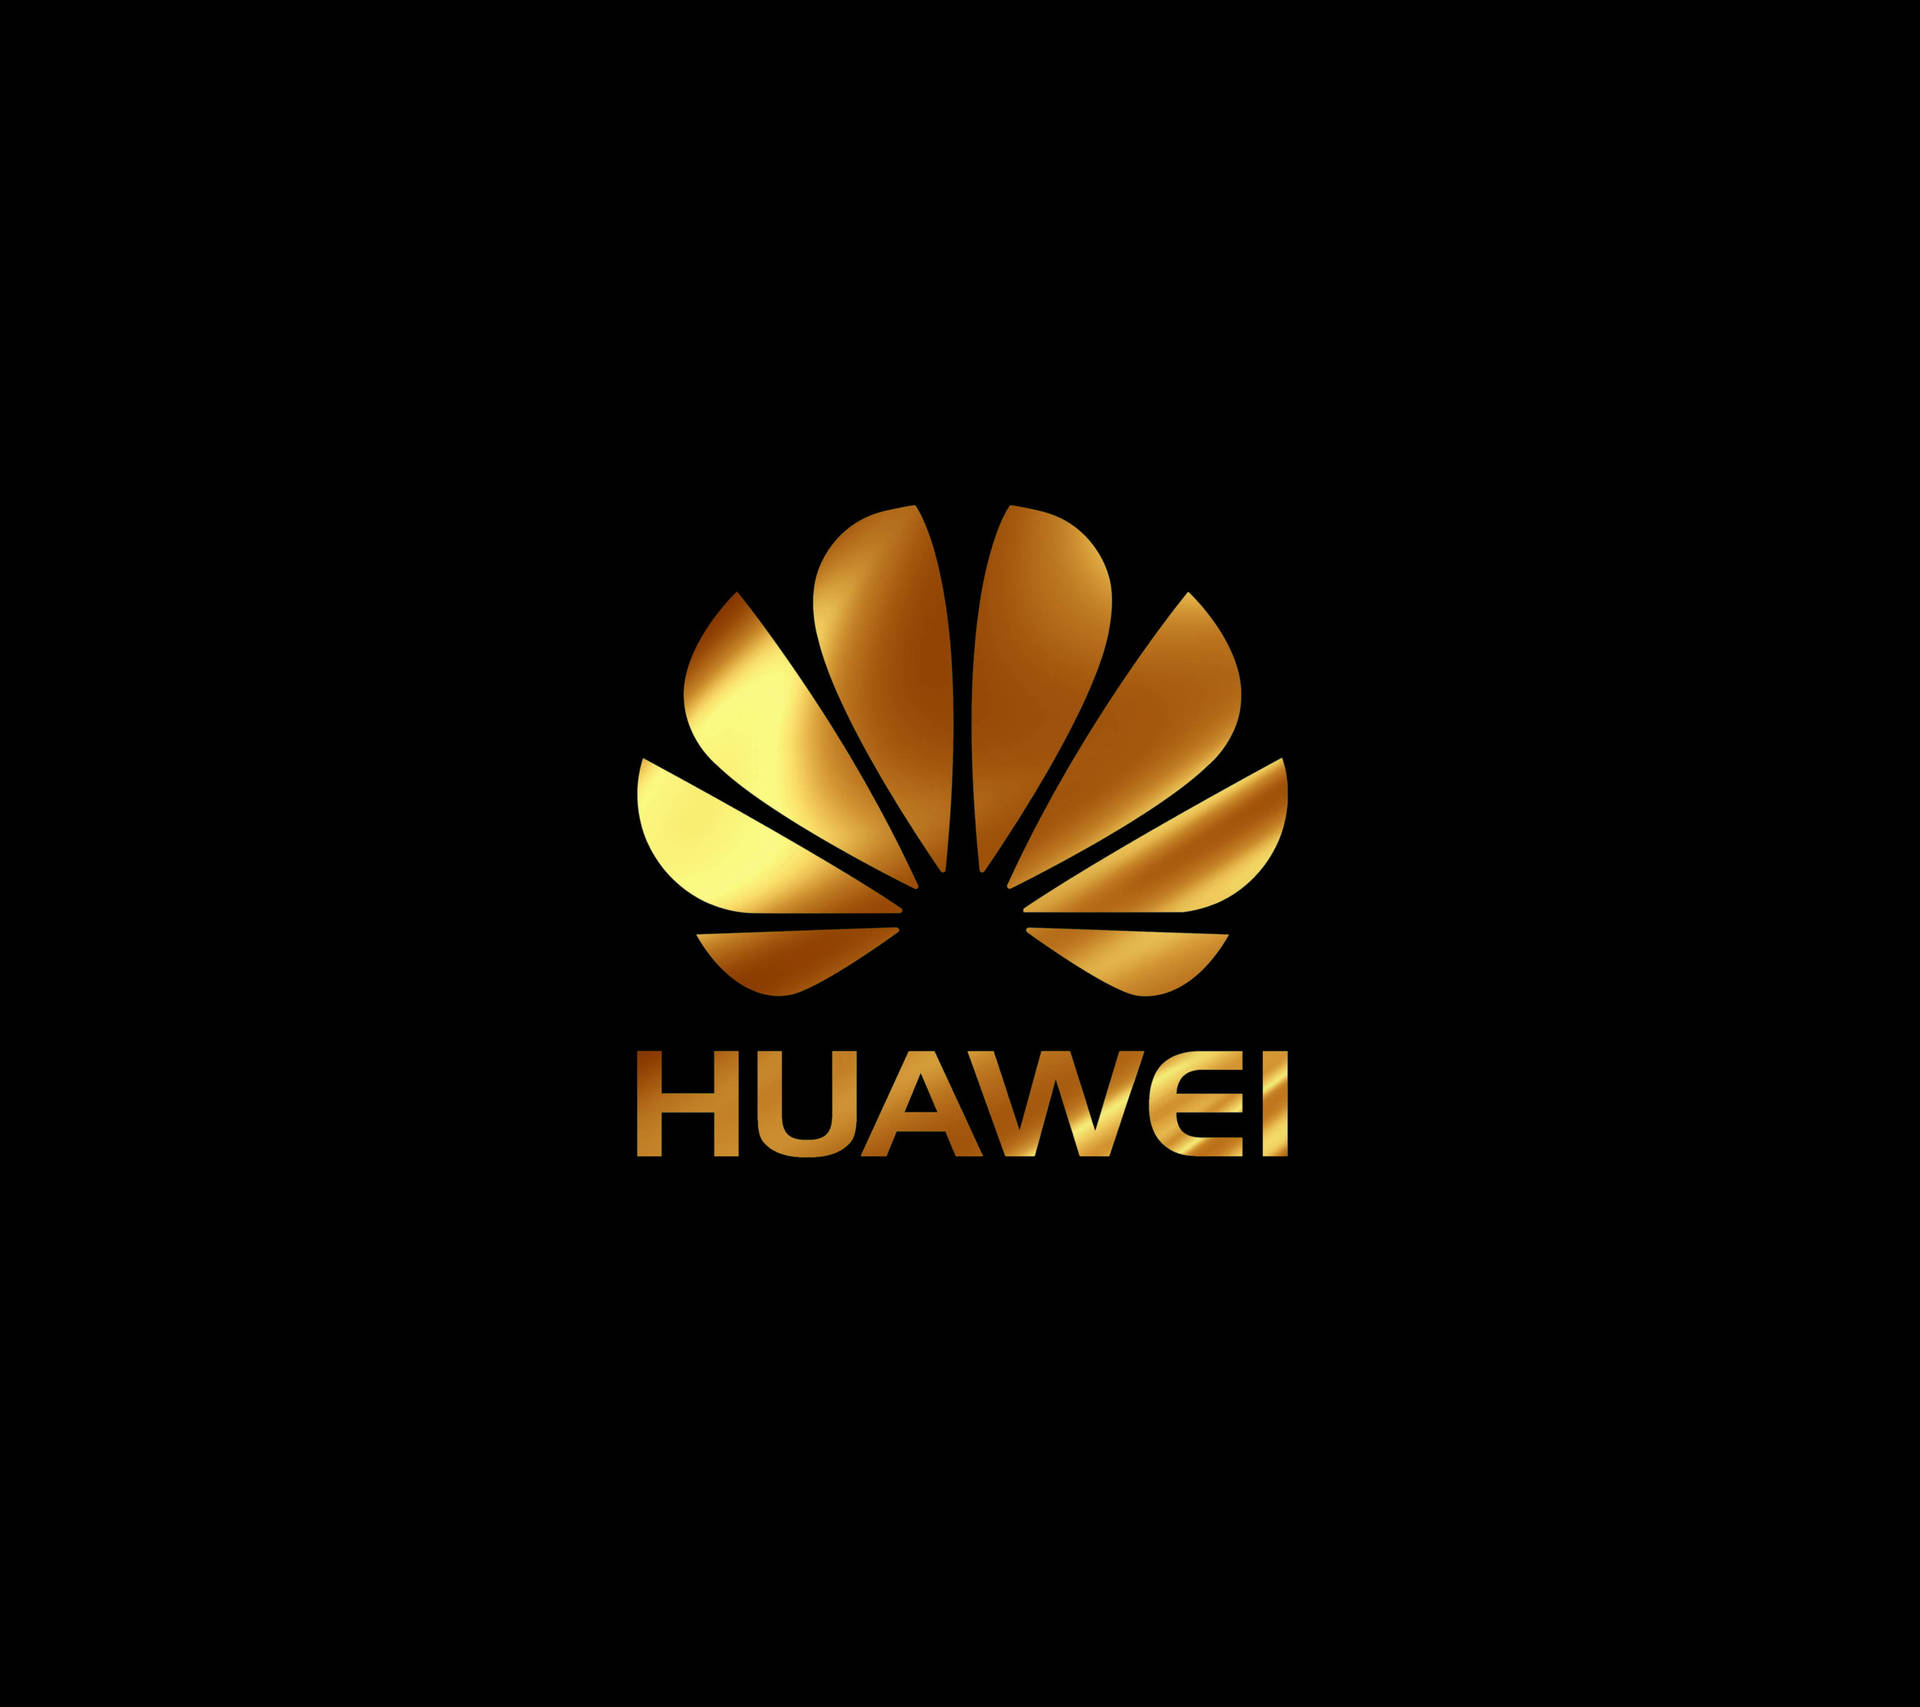 Huawei Gold Brand Logo Background